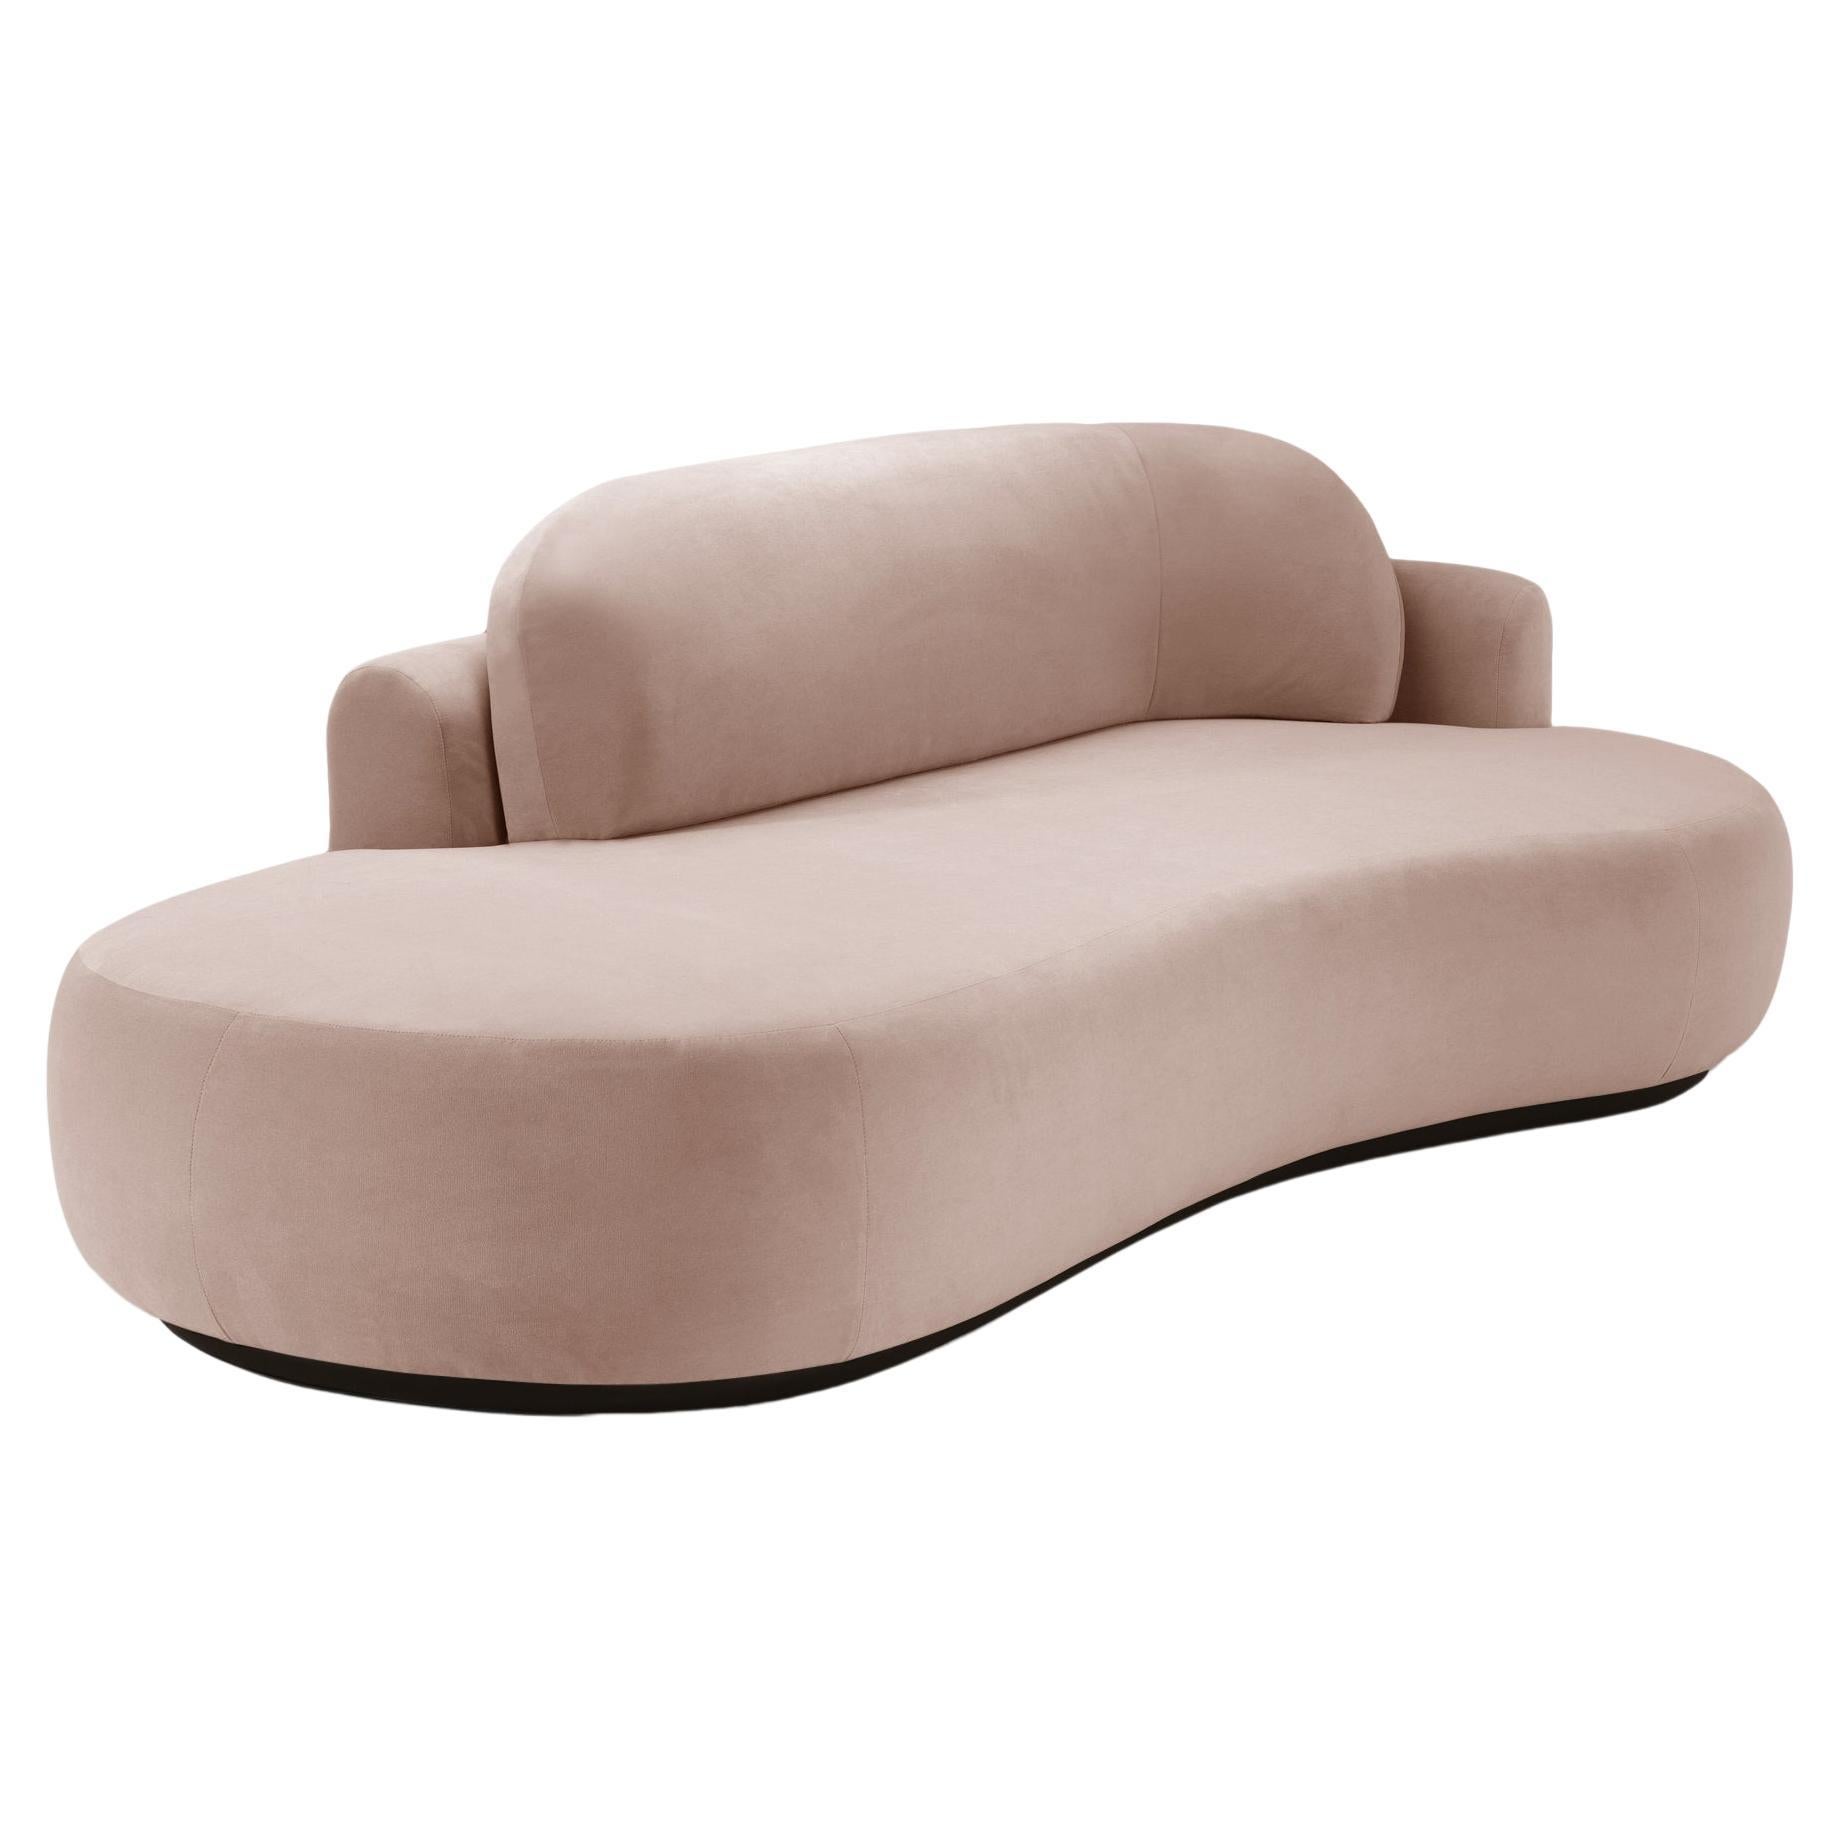 Naked Curved Sofa Single with Beech Ash-056-5 and Vigo Blossom For Sale